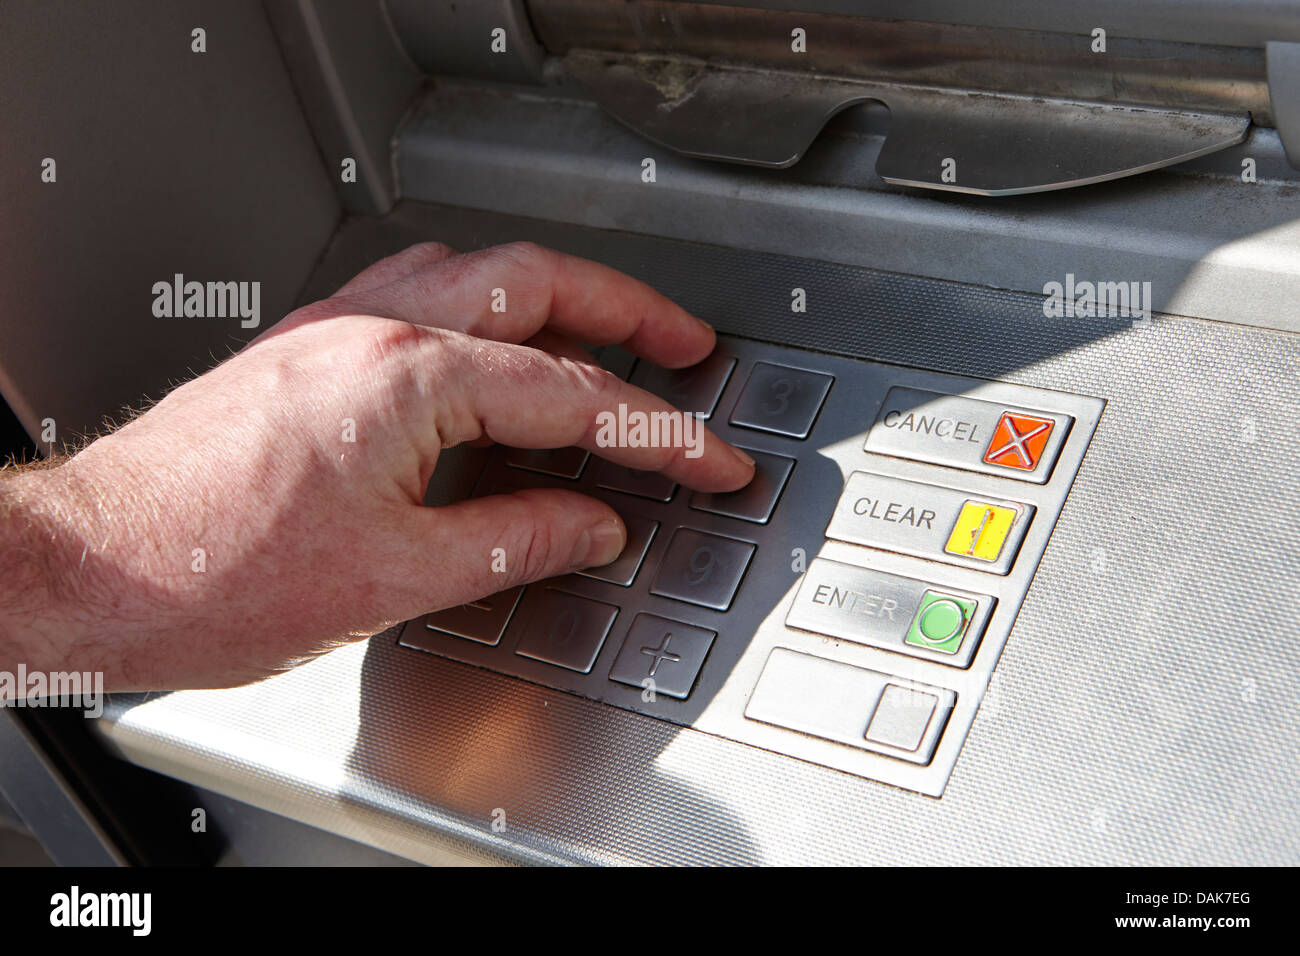 man operating atm cash machine entering pin london, england uk Stock Photo